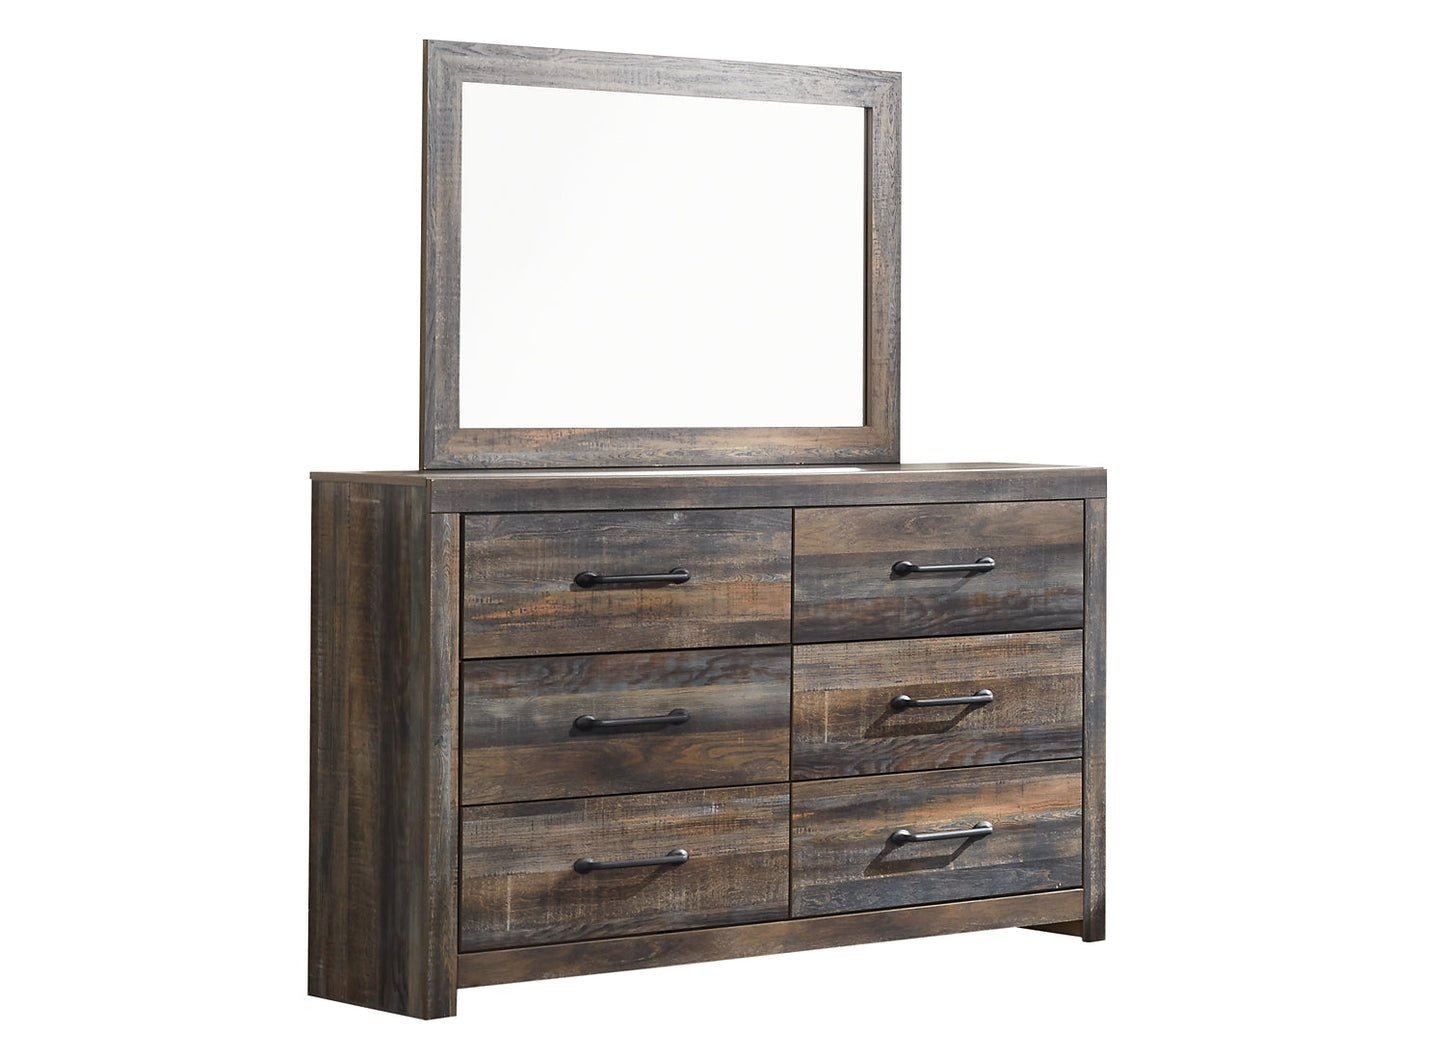 Drystan Full Panel Headboard with Mirrored Dresser at Cloud 9 Mattress & Furniture furniture, home furnishing, home decor